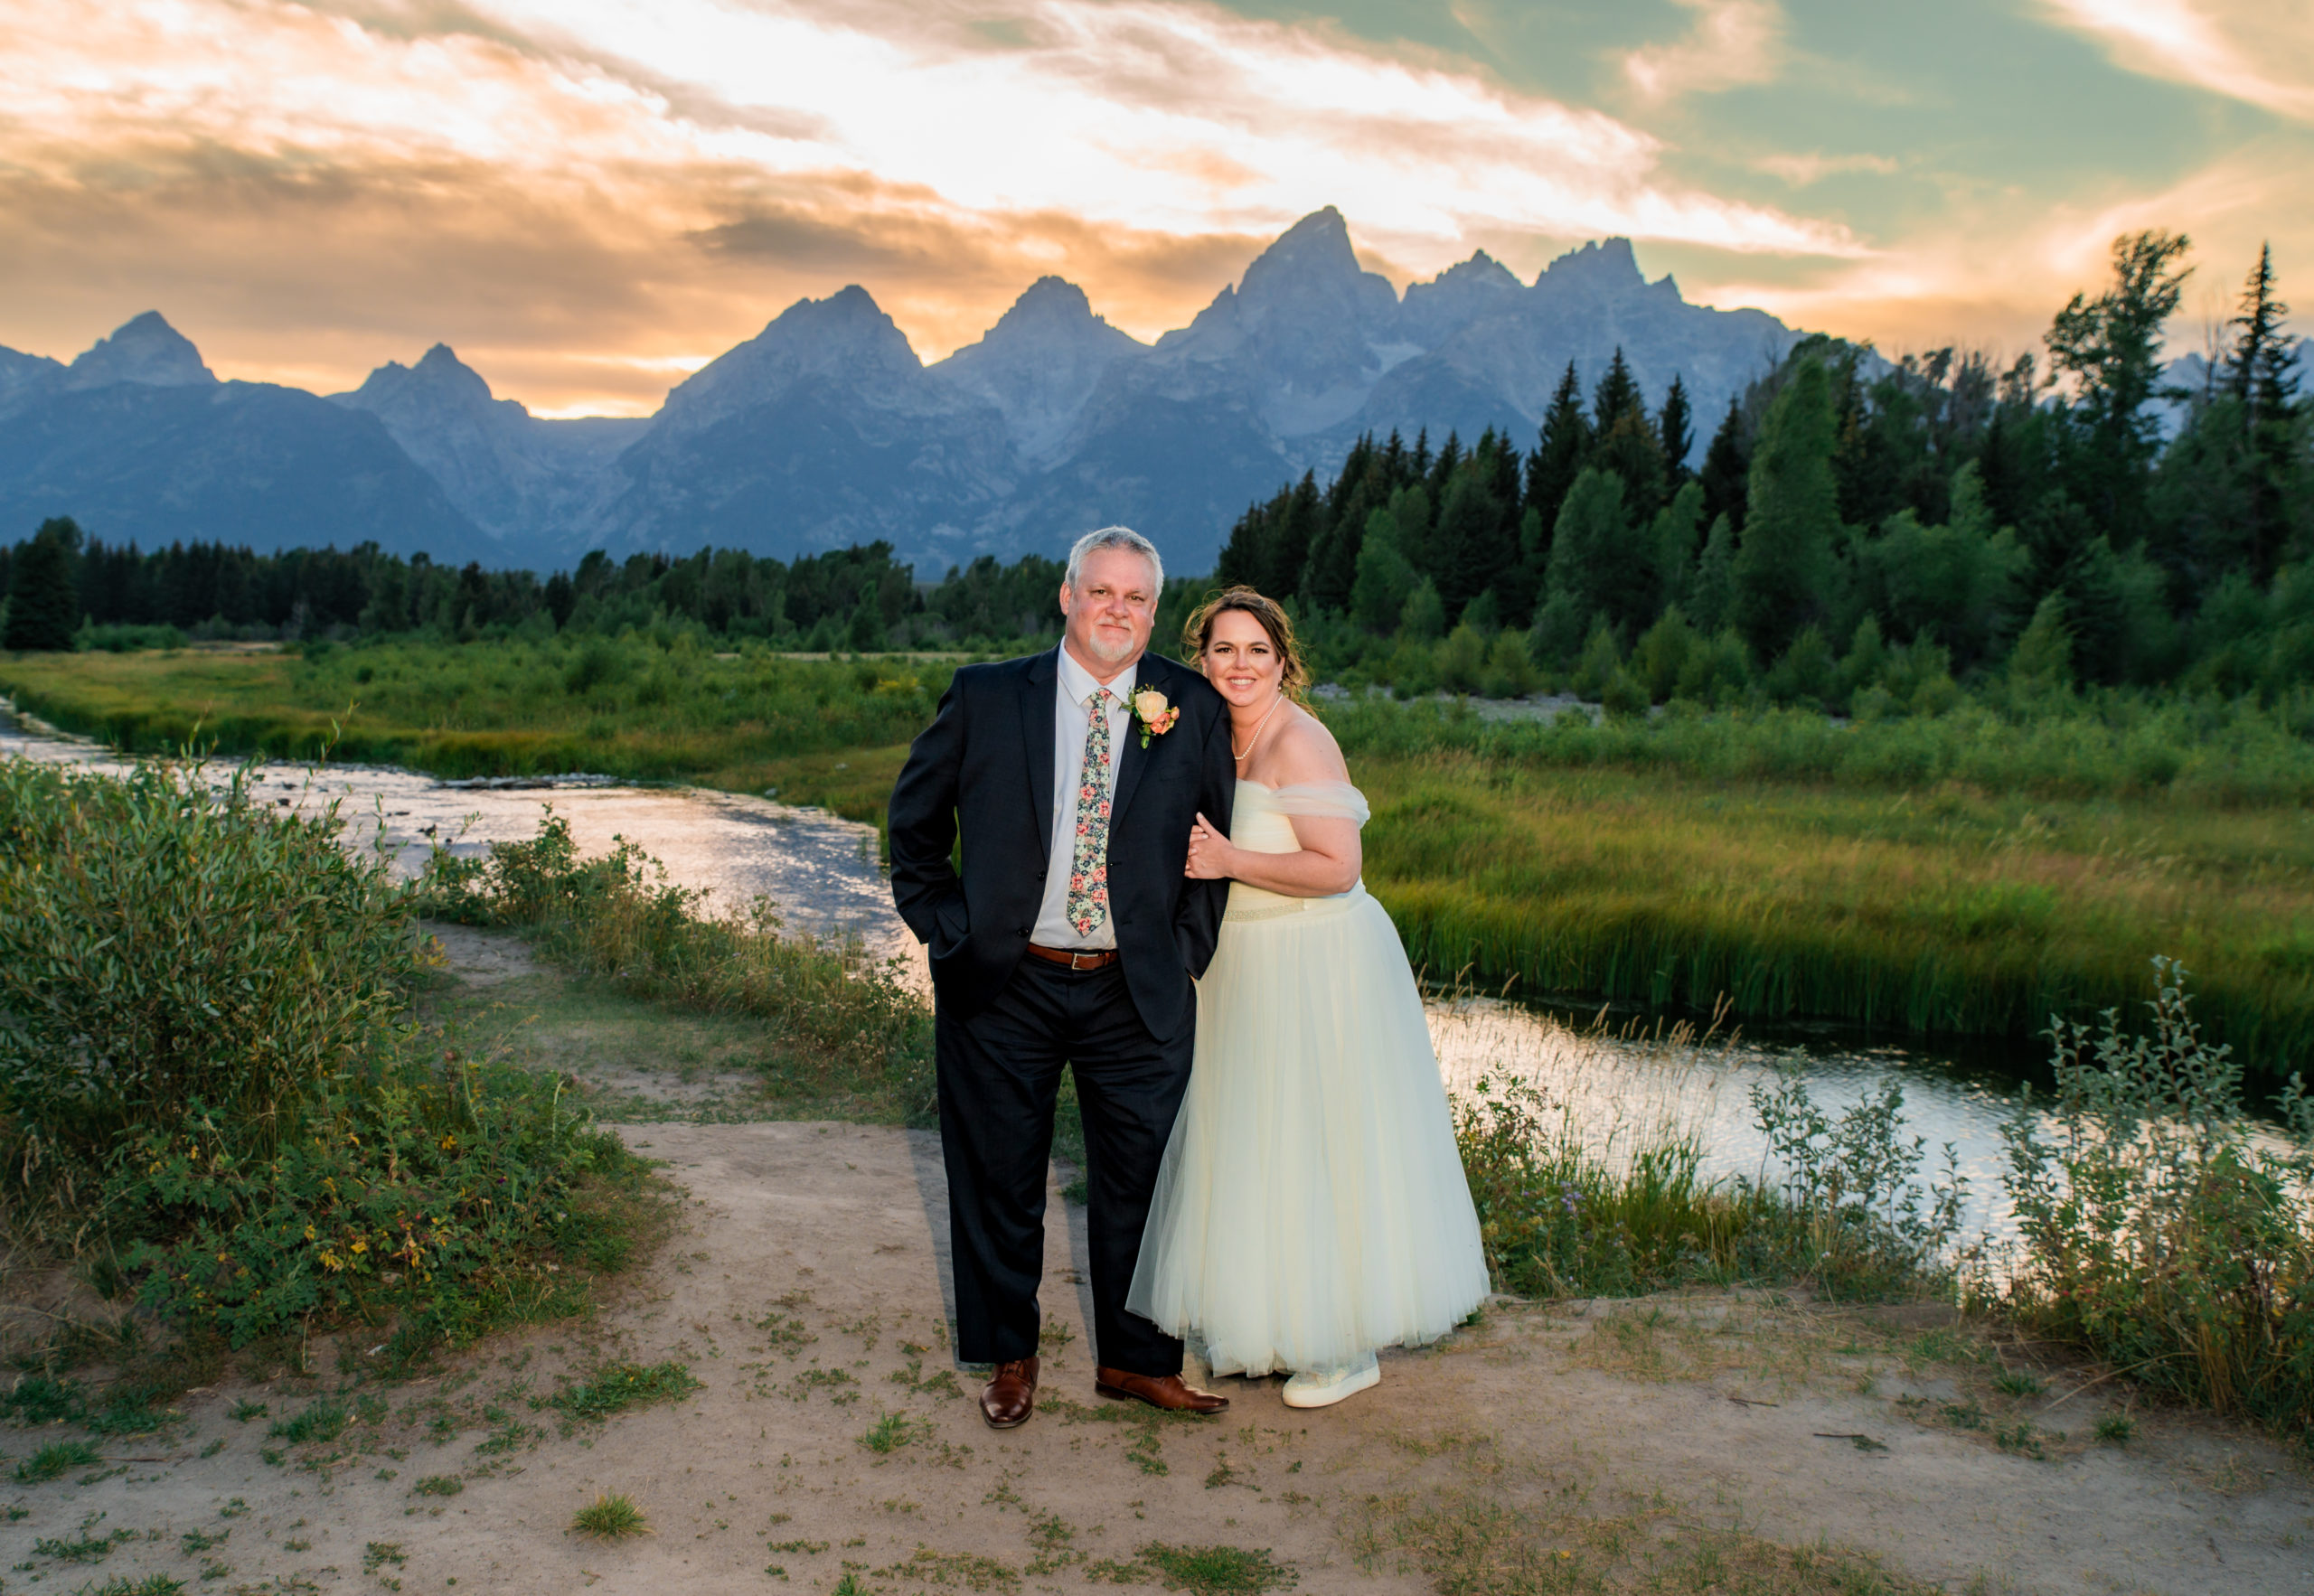 Grand Teton wedding photographer captures couple embracing during sunset portraits